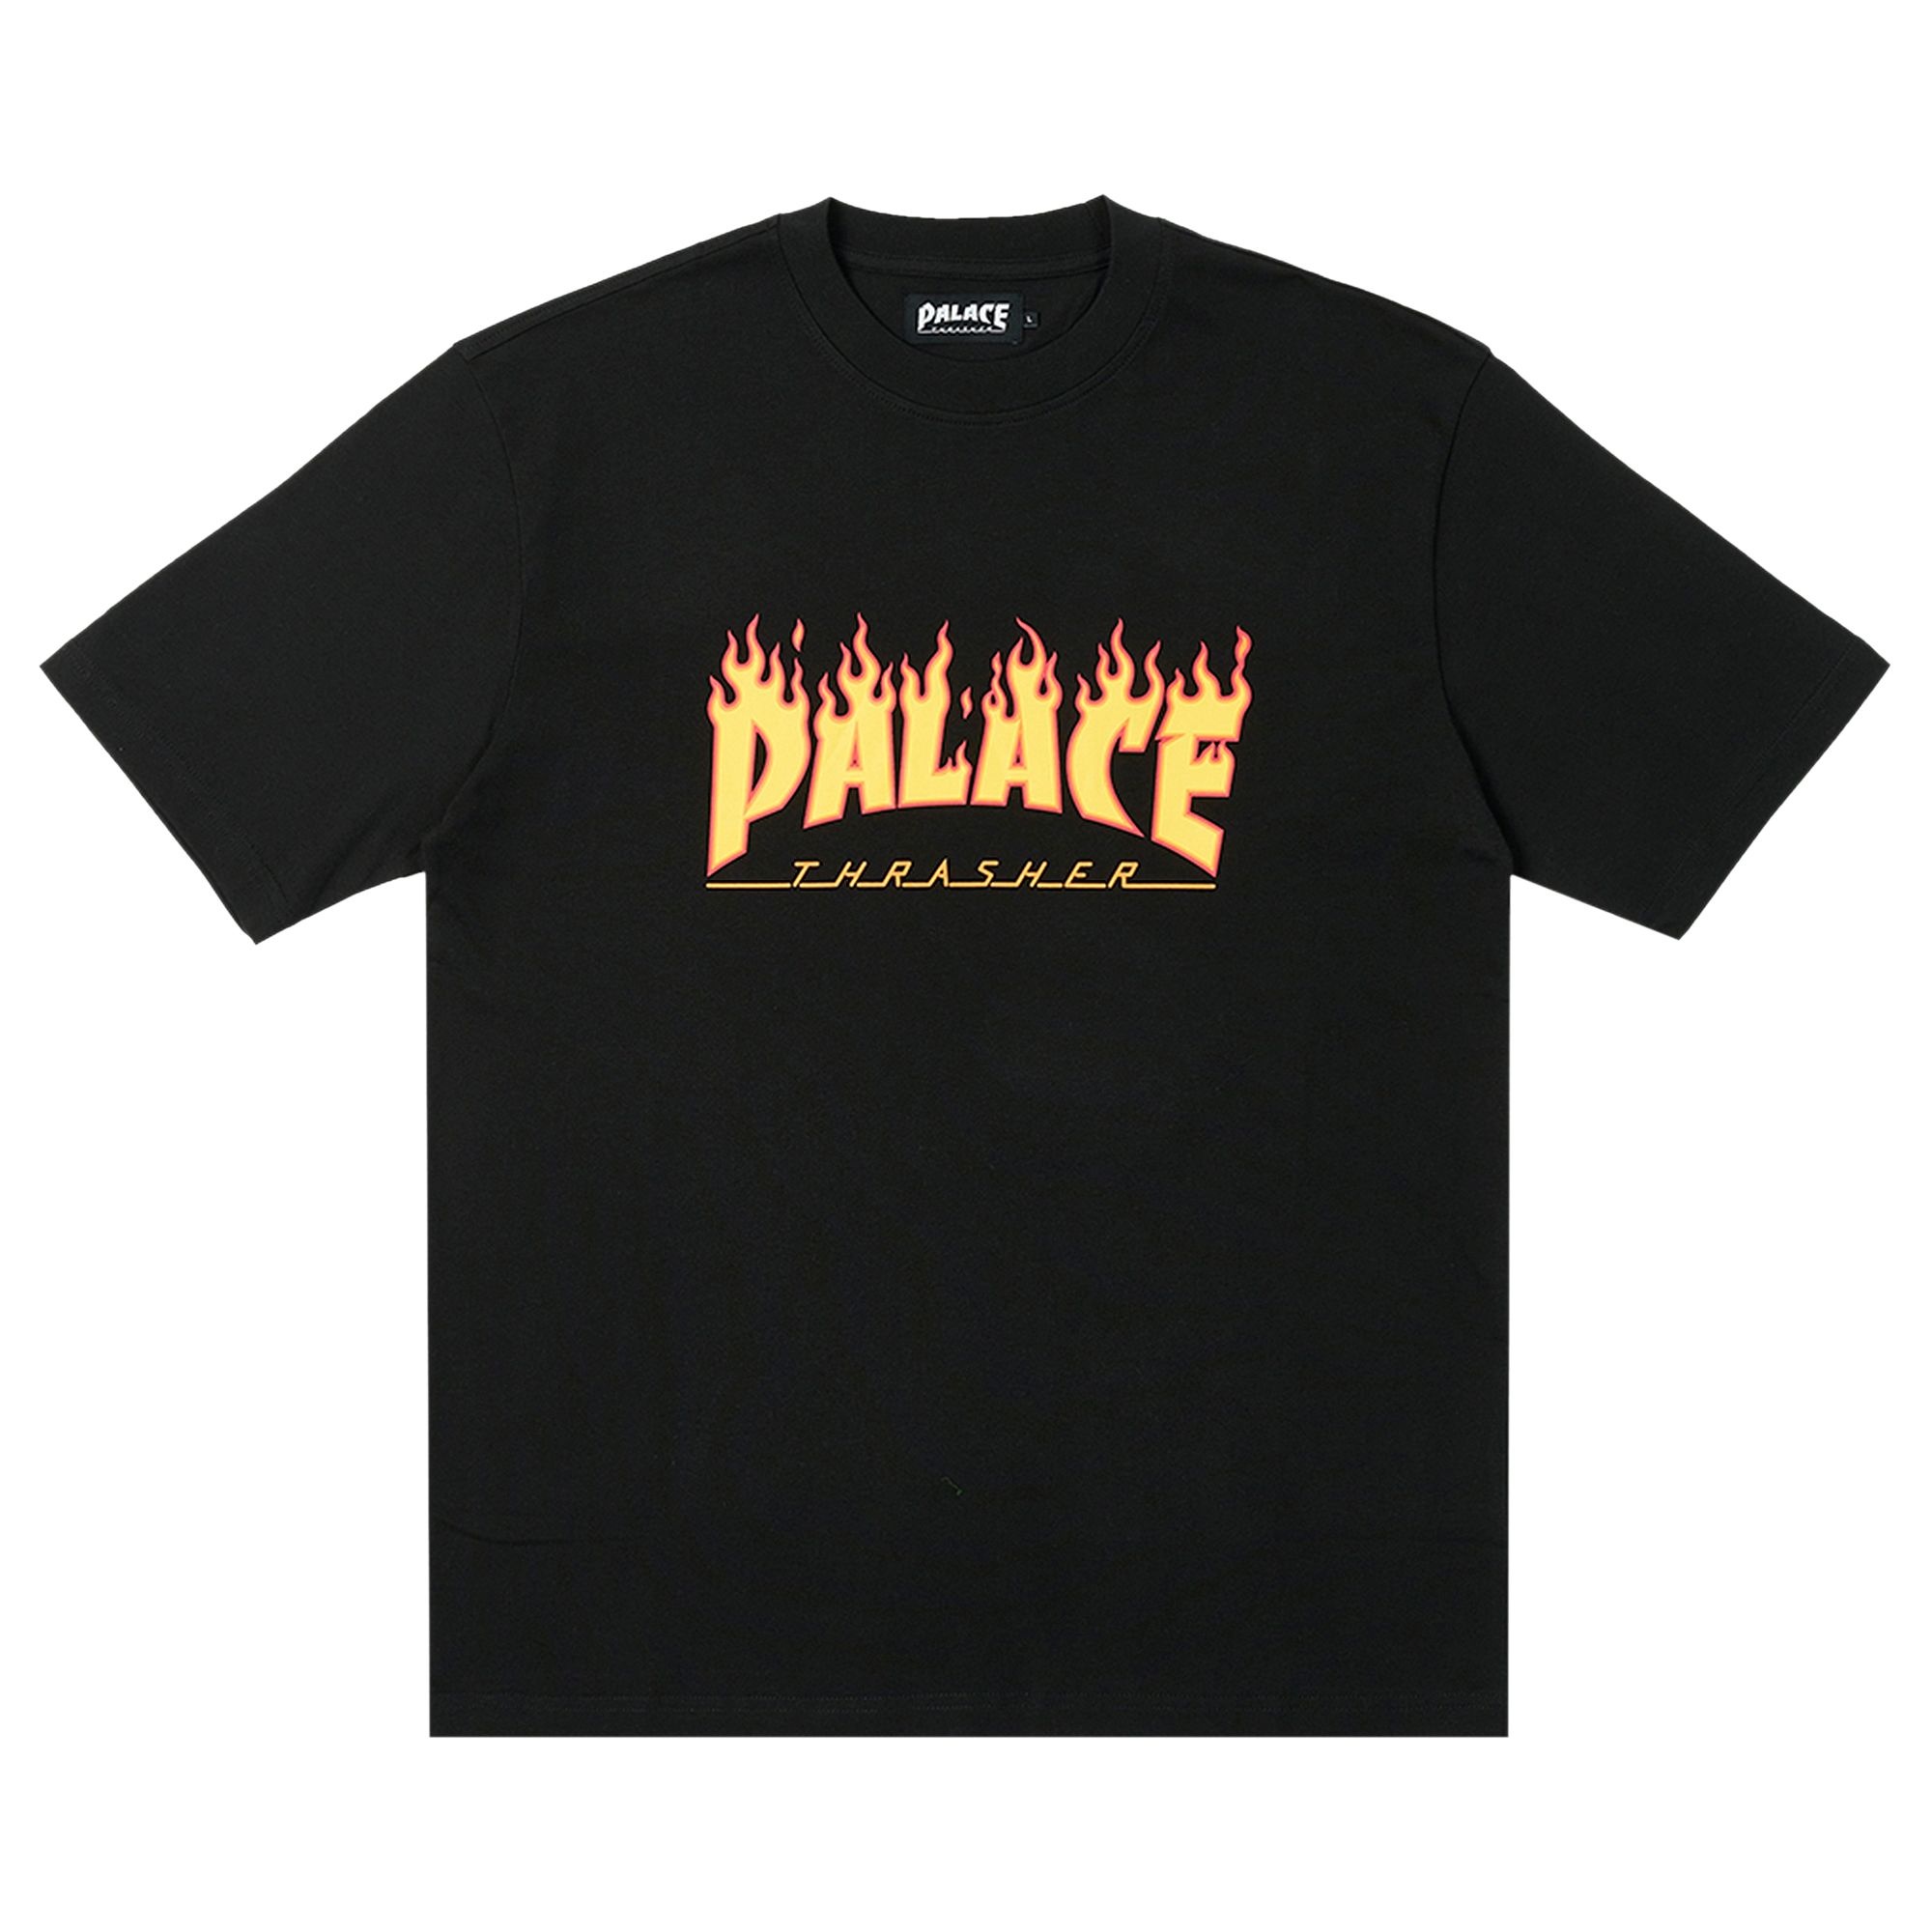 Palace x Thrasher T-Shirt 'Black' - 1